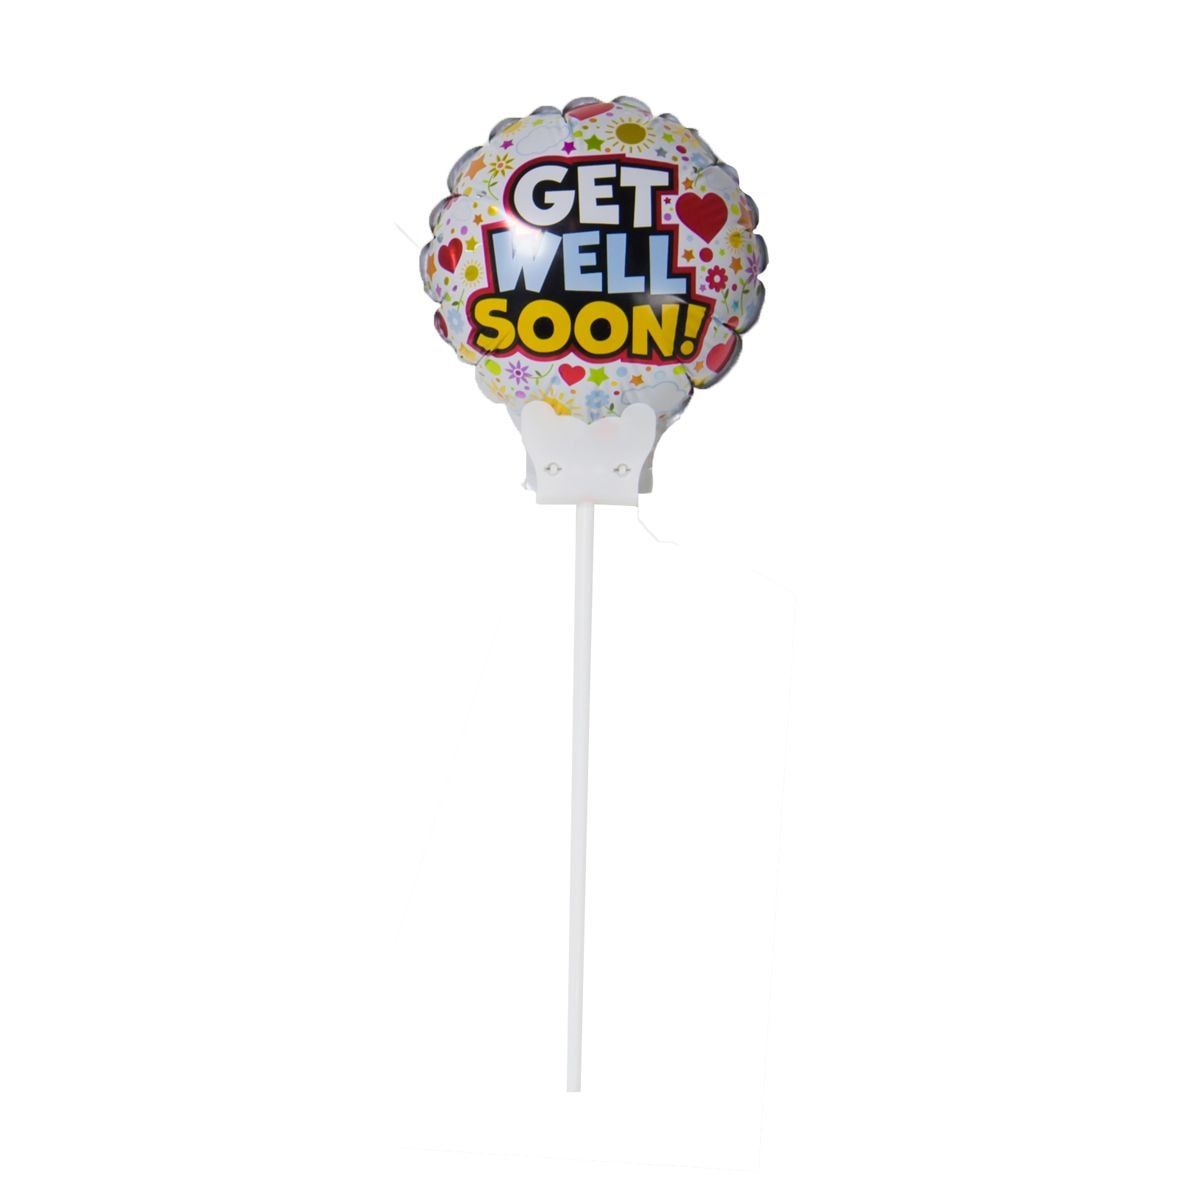 Get wel soon mini folie wensballon